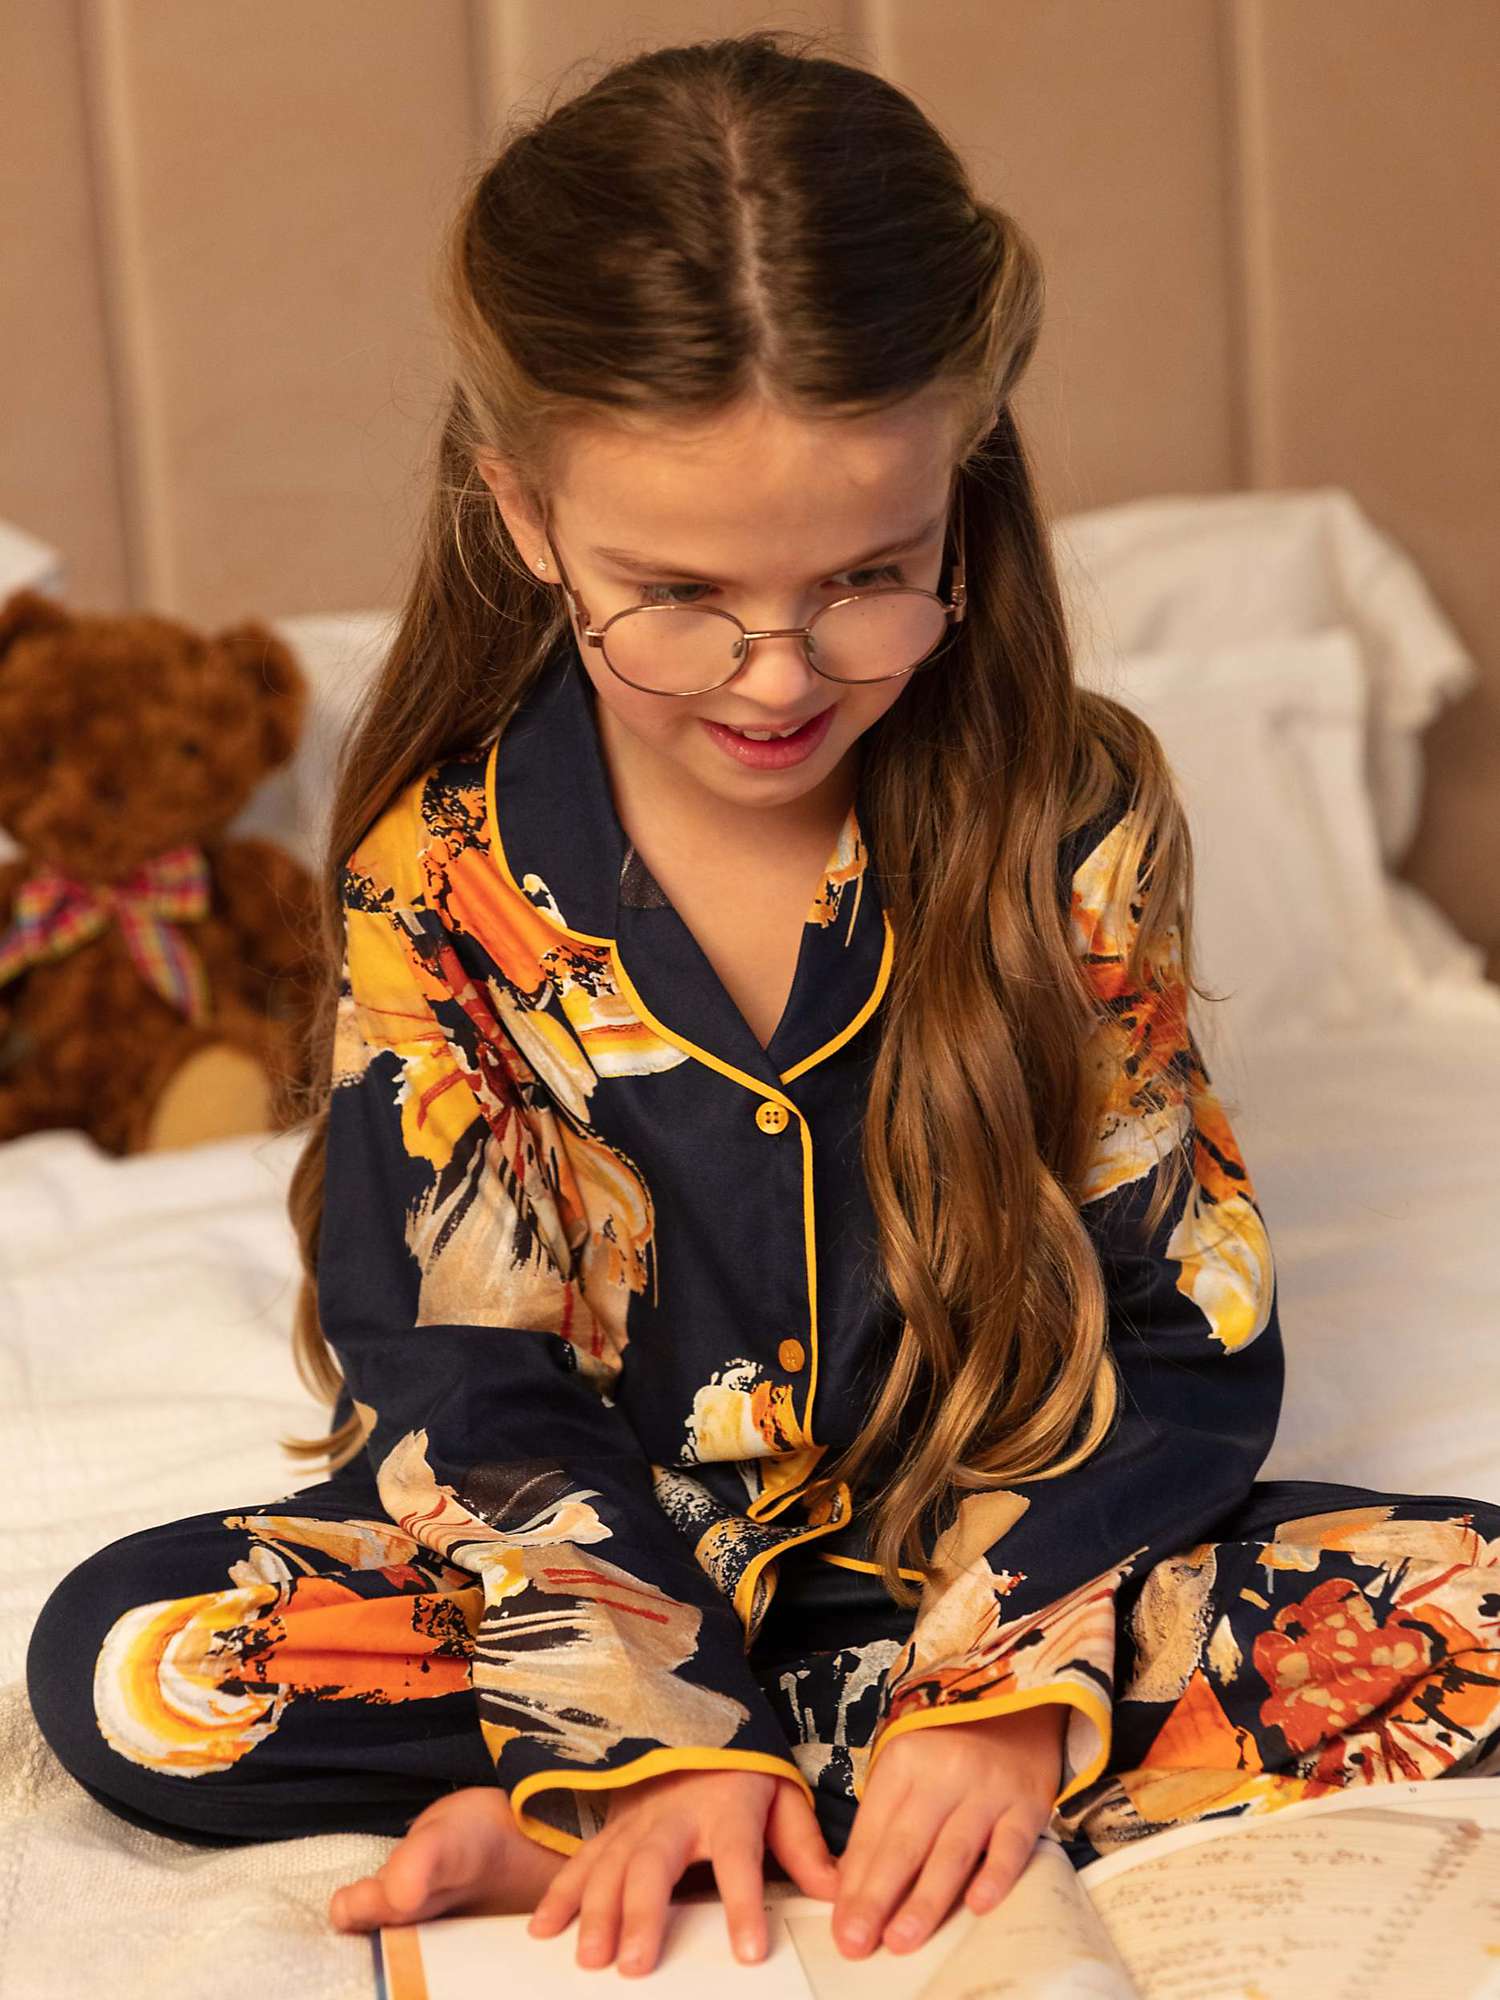 Buy Minijammies Cosmo Floral Print Pyjamas, Navy/Orange Online at johnlewis.com